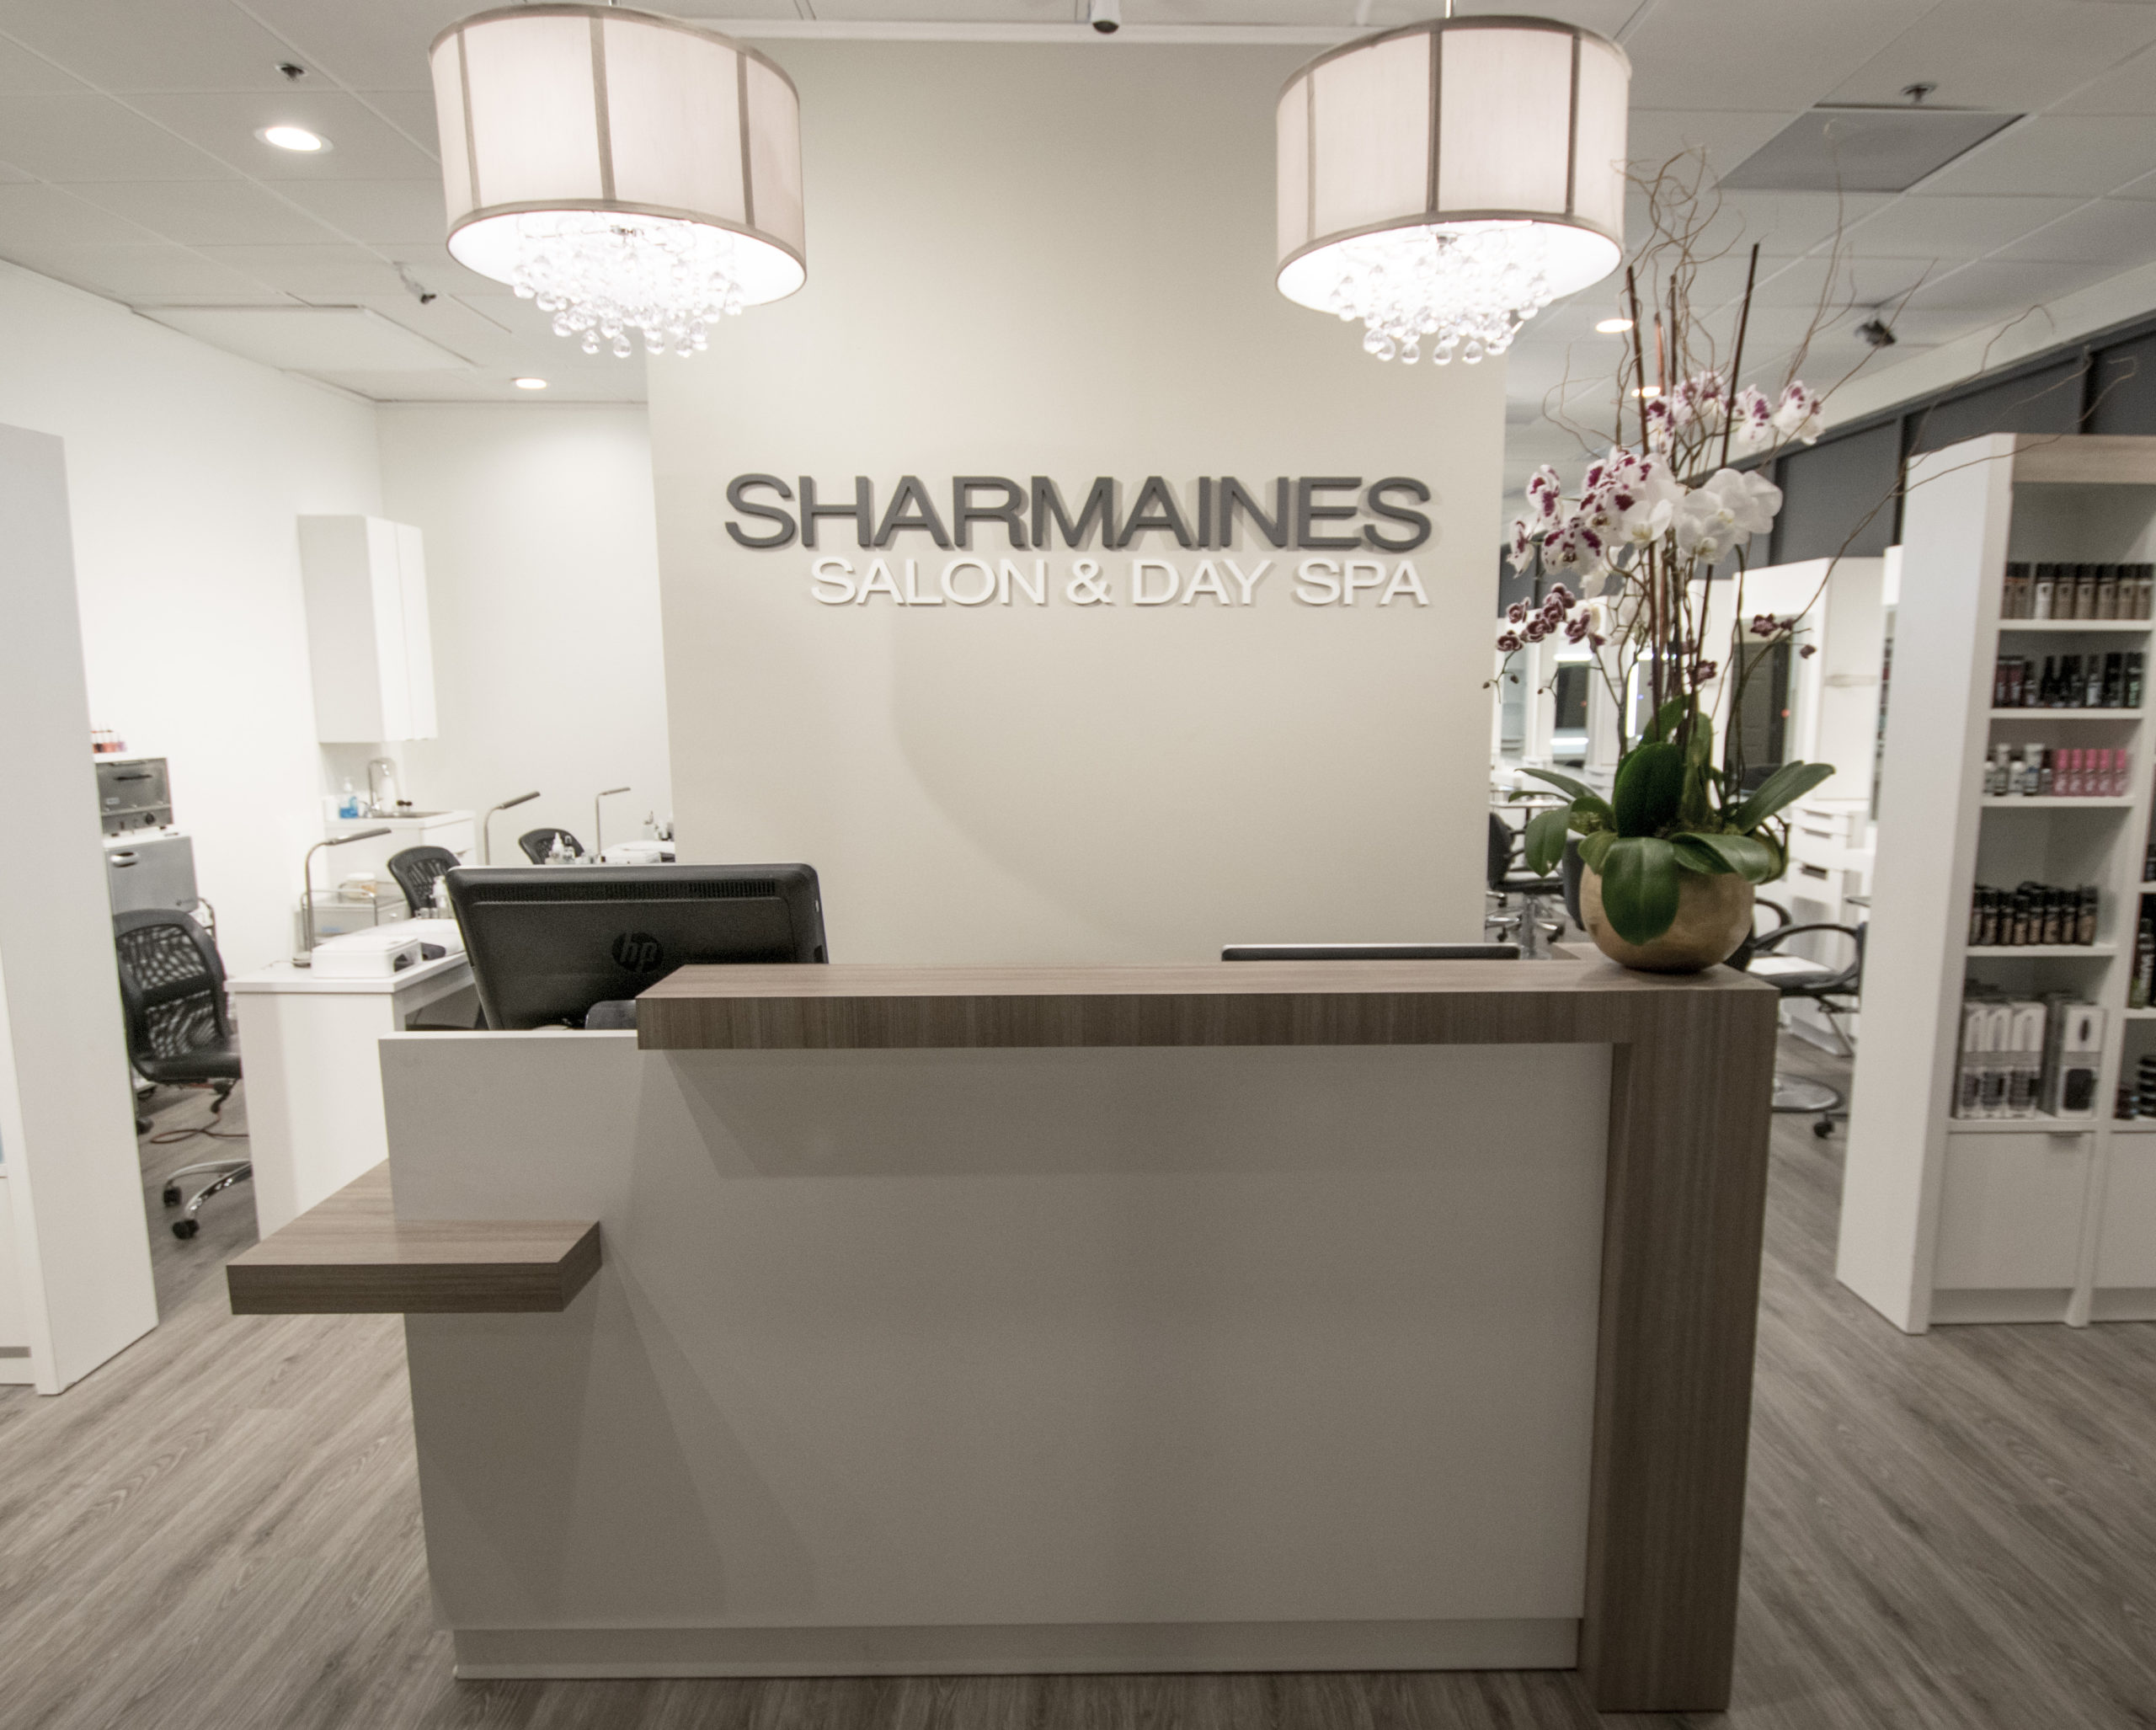 Sharmaine's Salon & Day Spa - Clearwater Beach, FL 33767